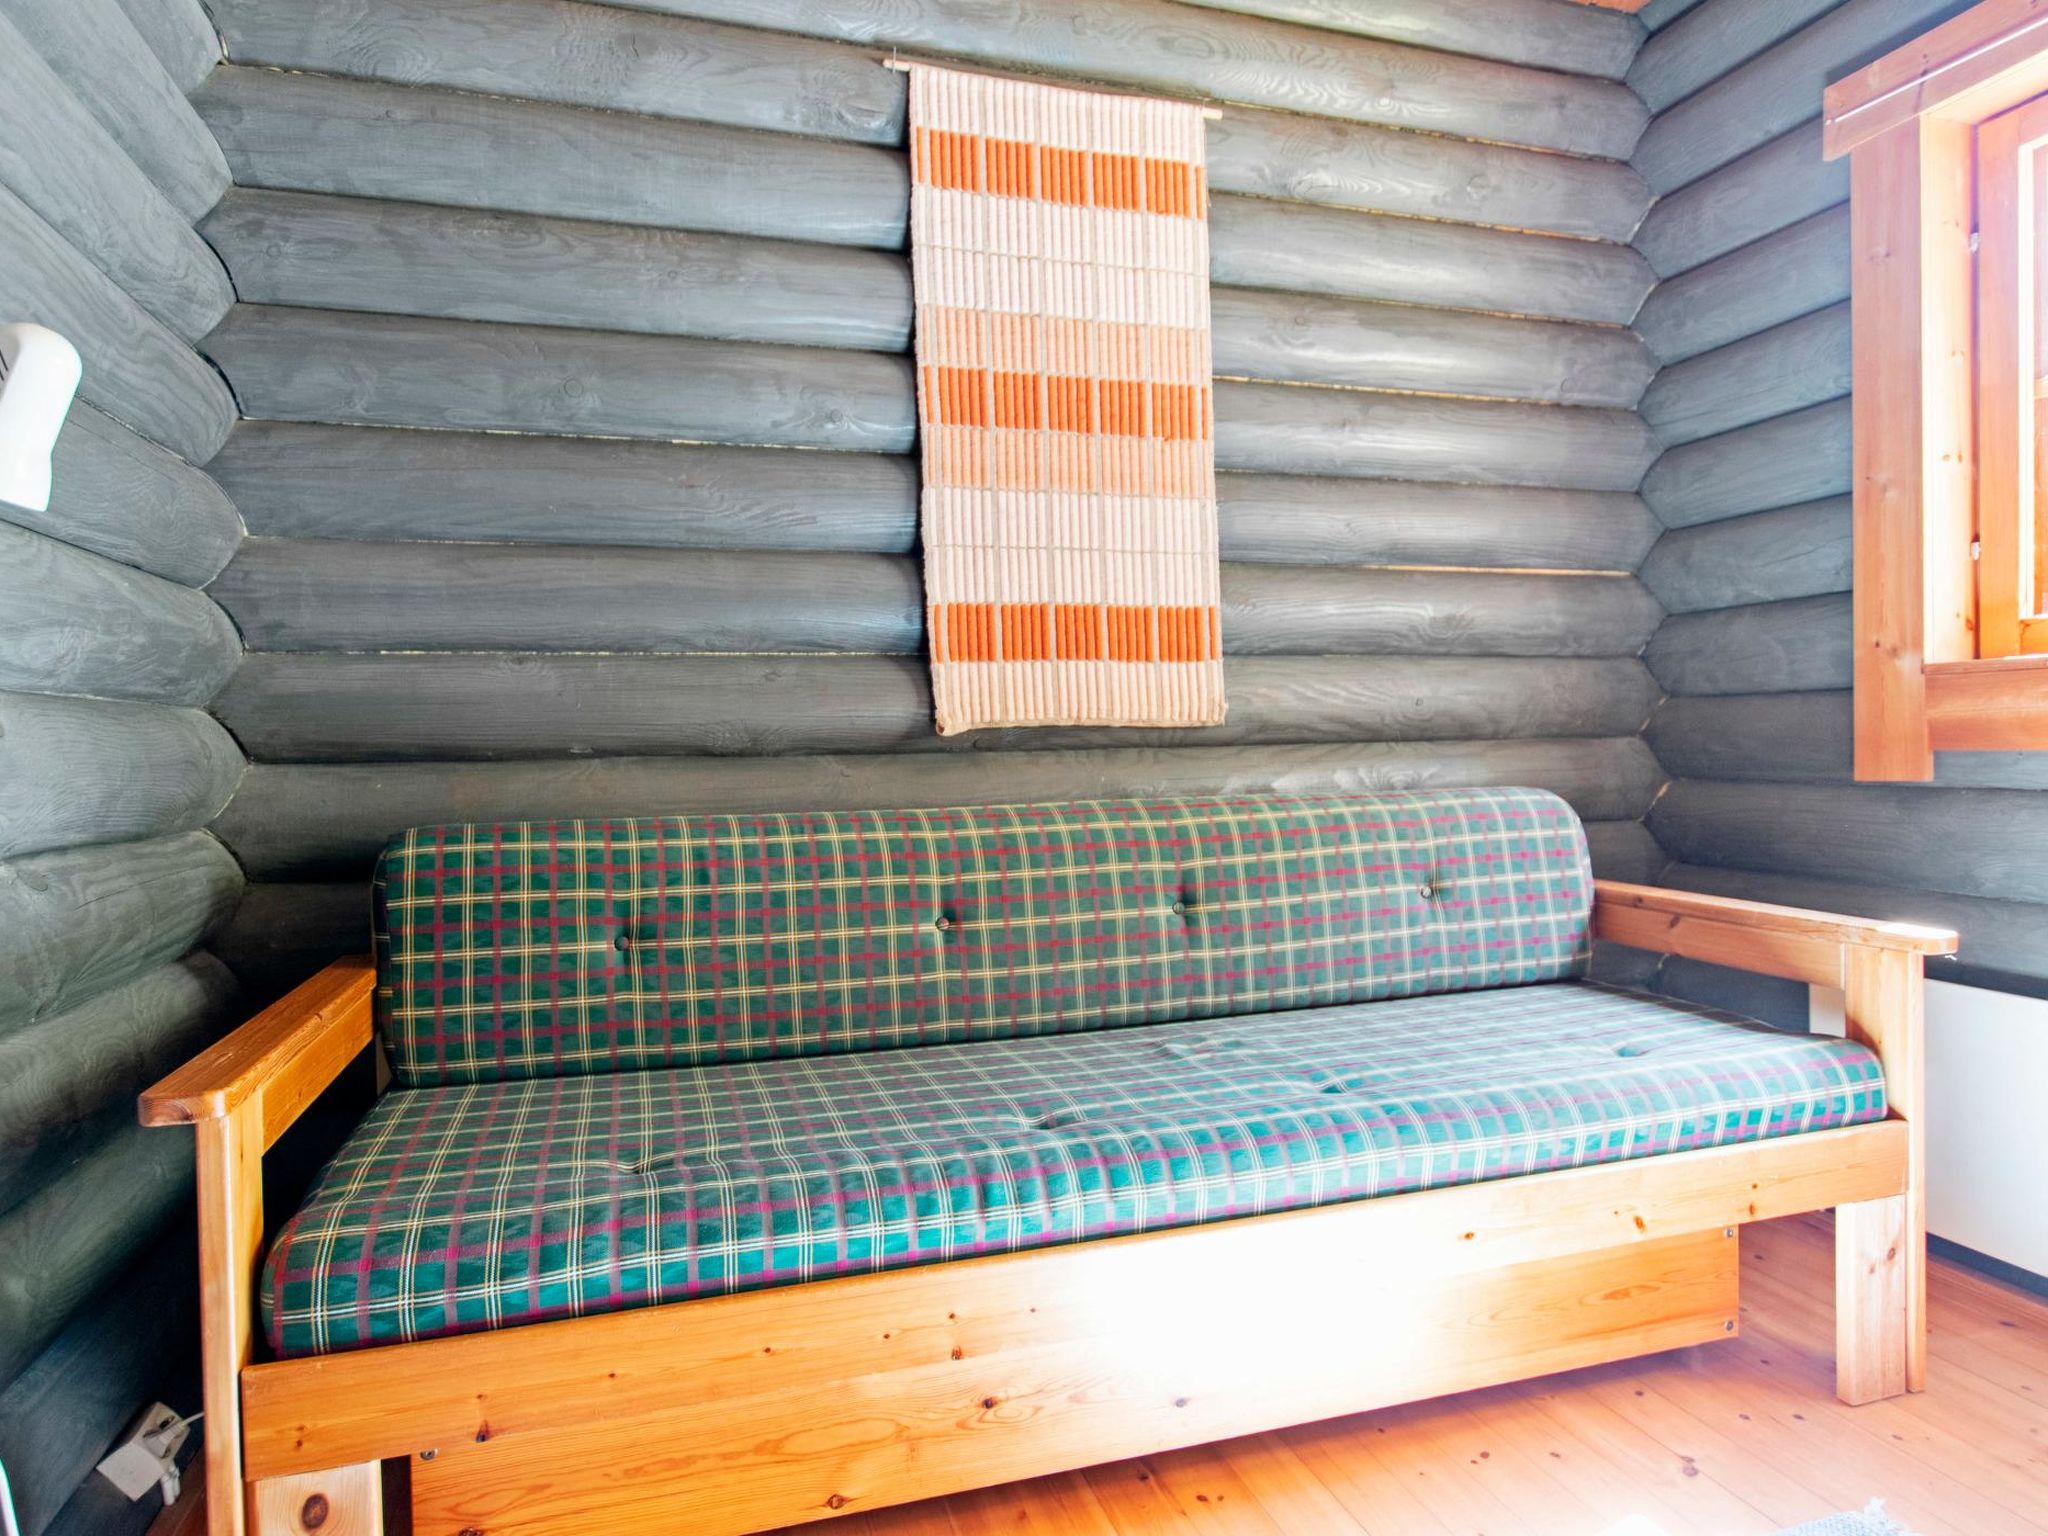 Photo 11 - 1 bedroom House in Jyvaskyla with sauna